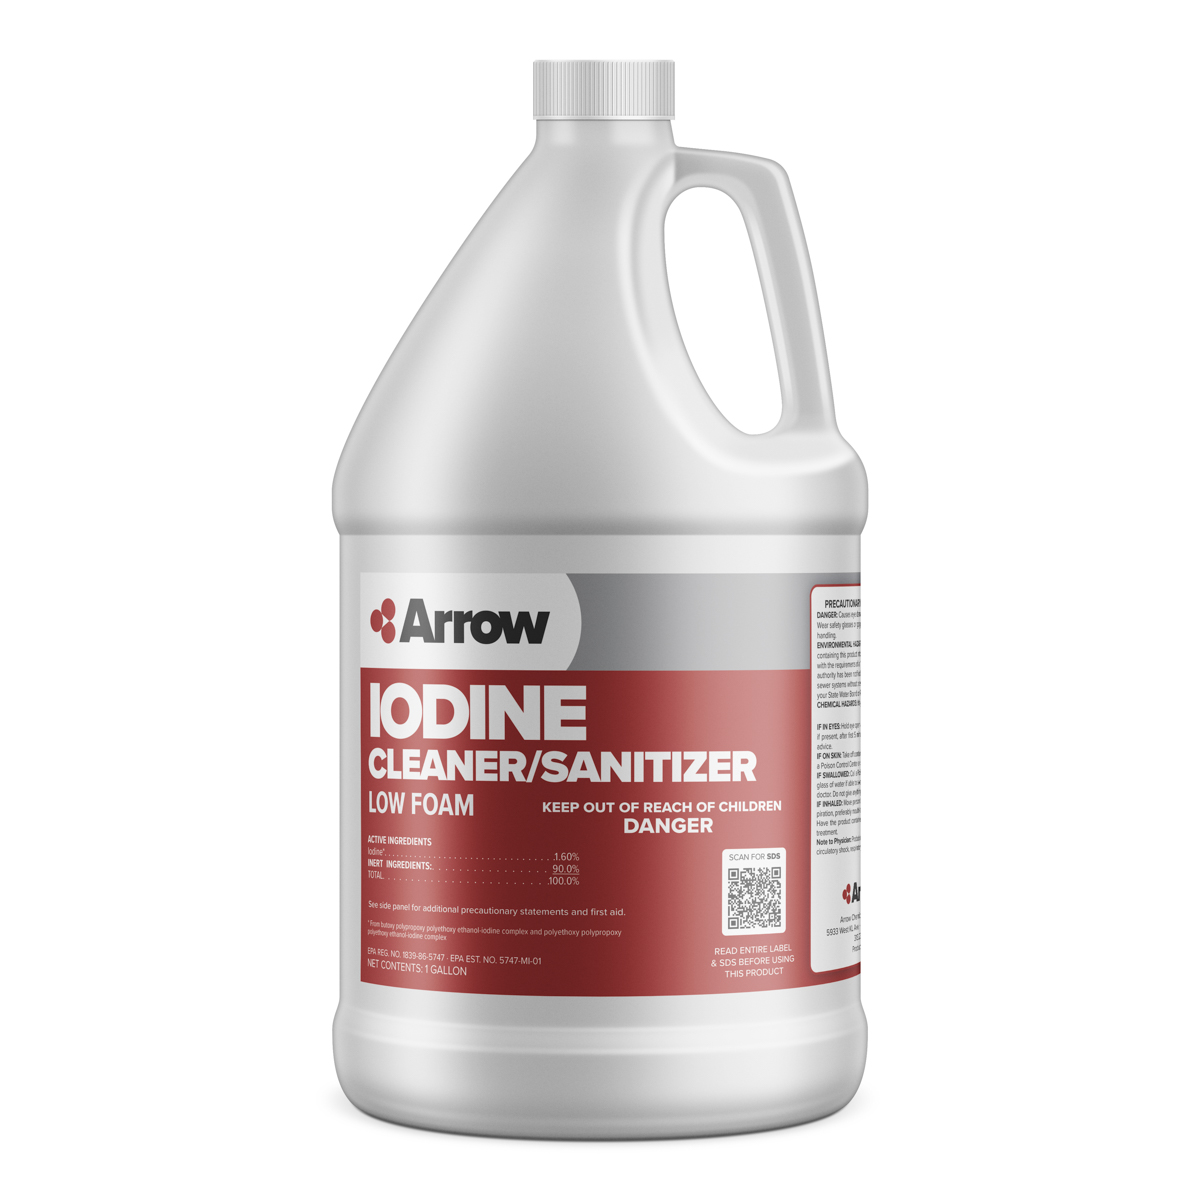 Arrow 149 Iodine Cleaner/Sanitizer